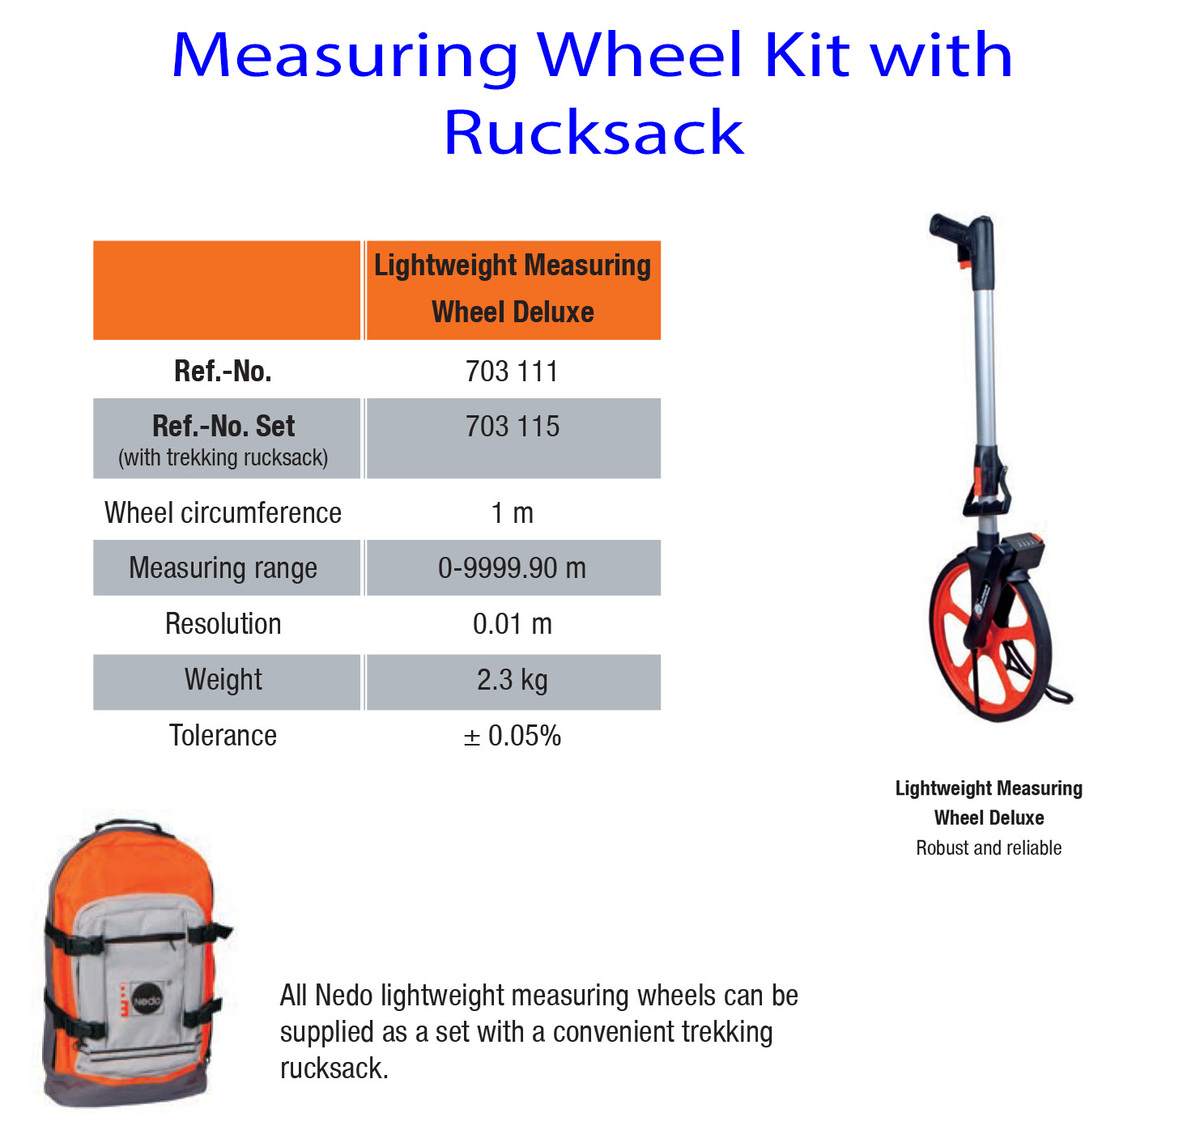 Measuring-Wheel-Kit-Rucksack-info.jpg#as